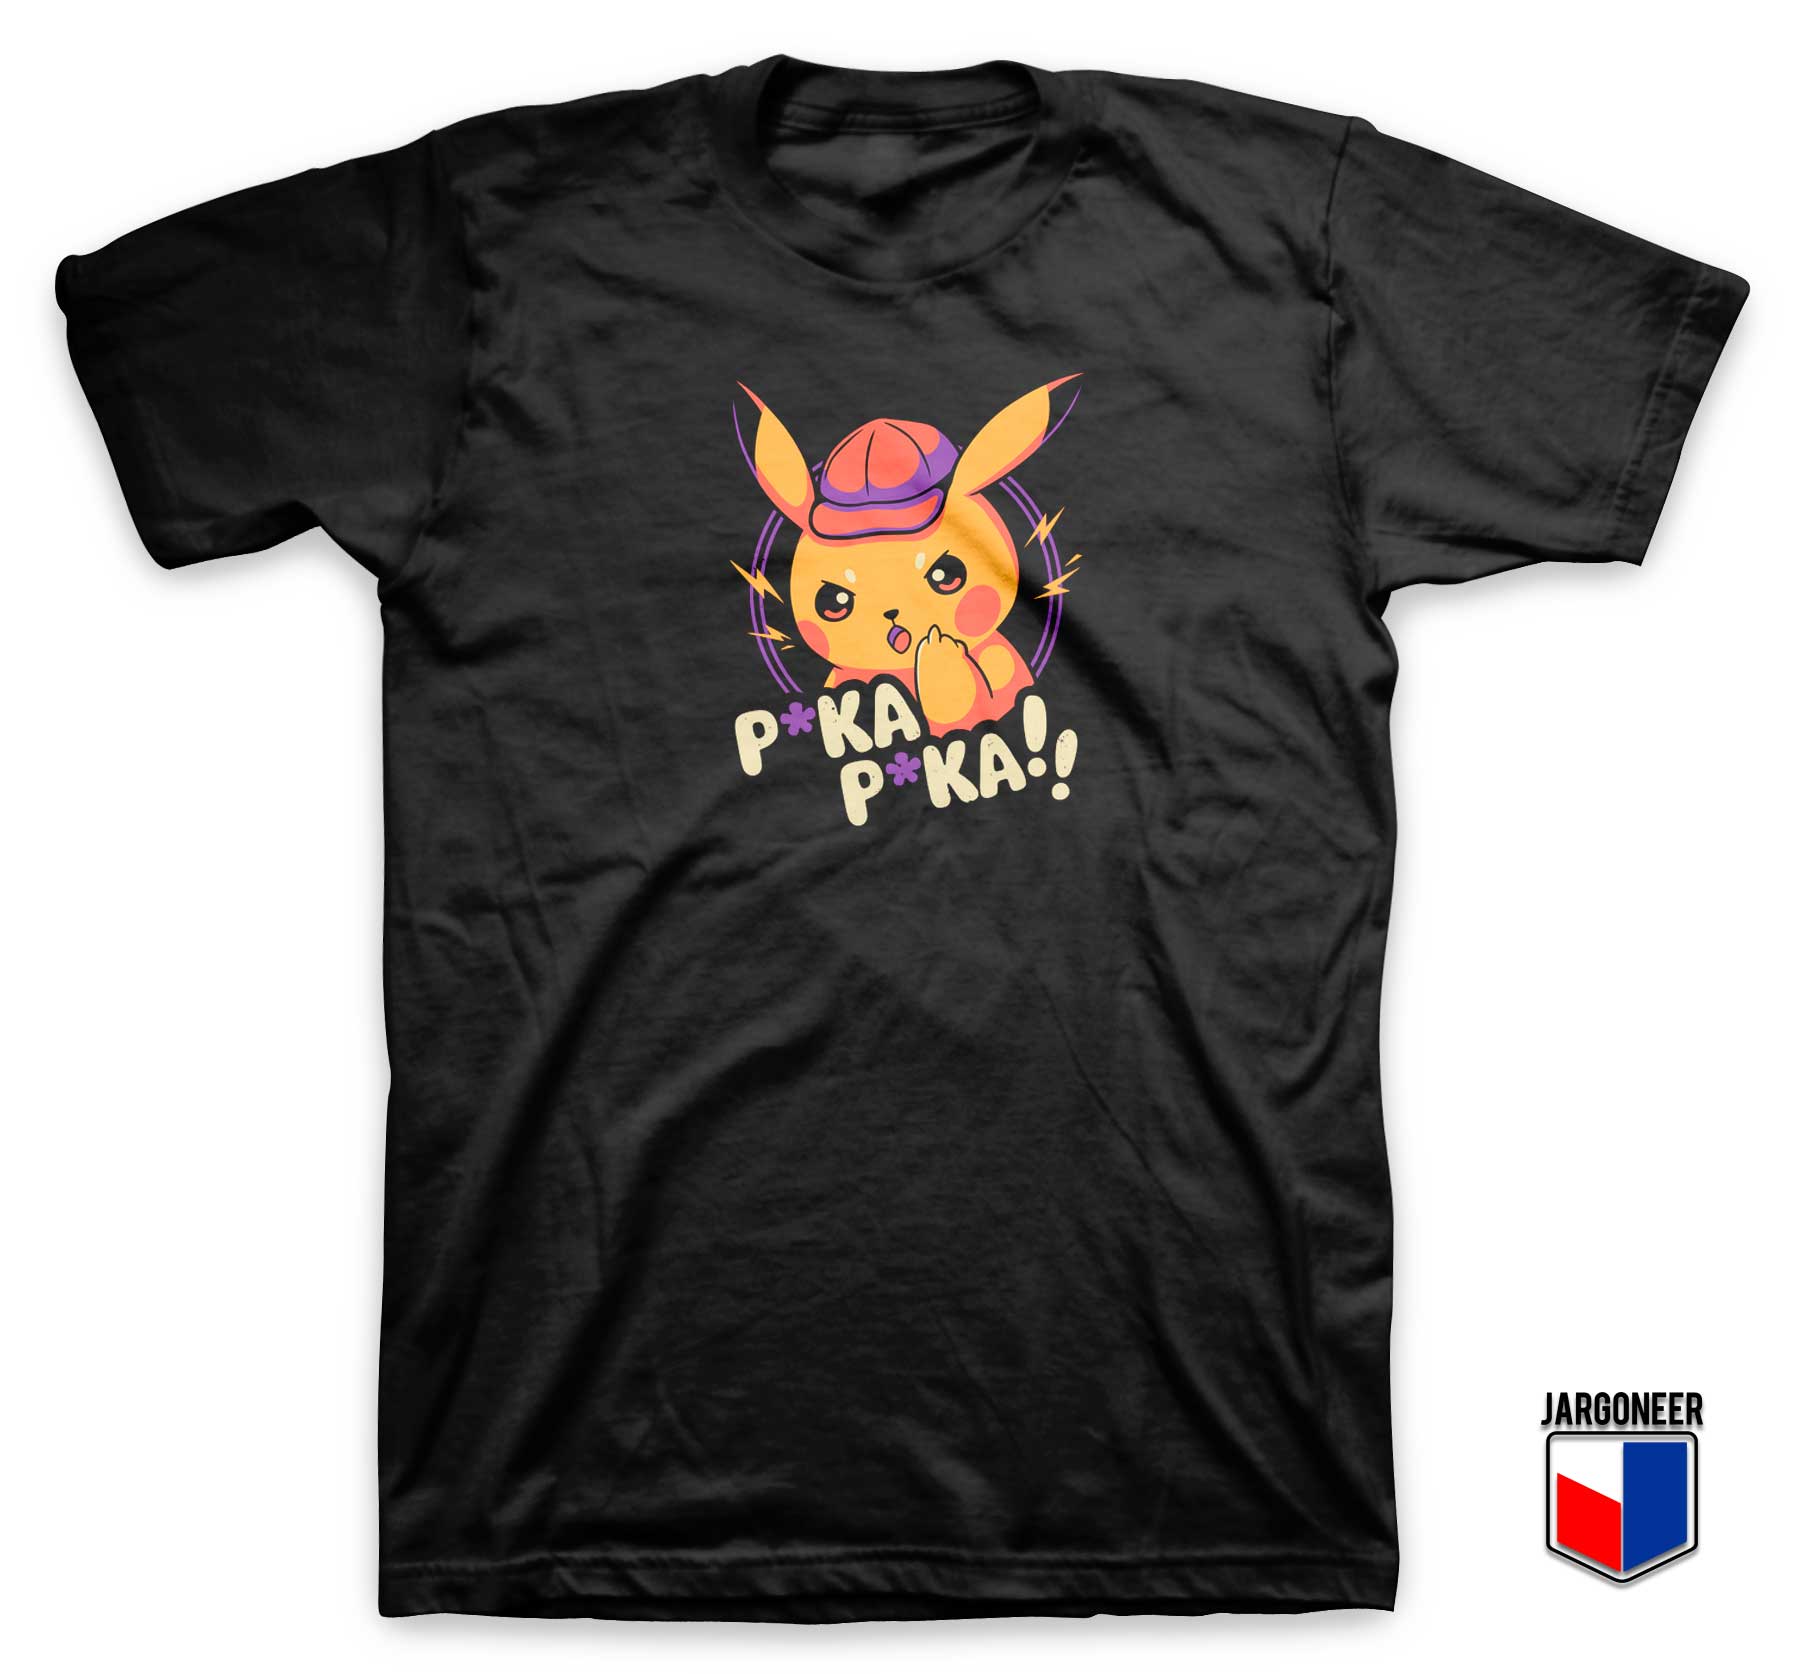 Angry Pika Pikachu T Shirt - Shop Unique Graphic Cool Shirt Designs